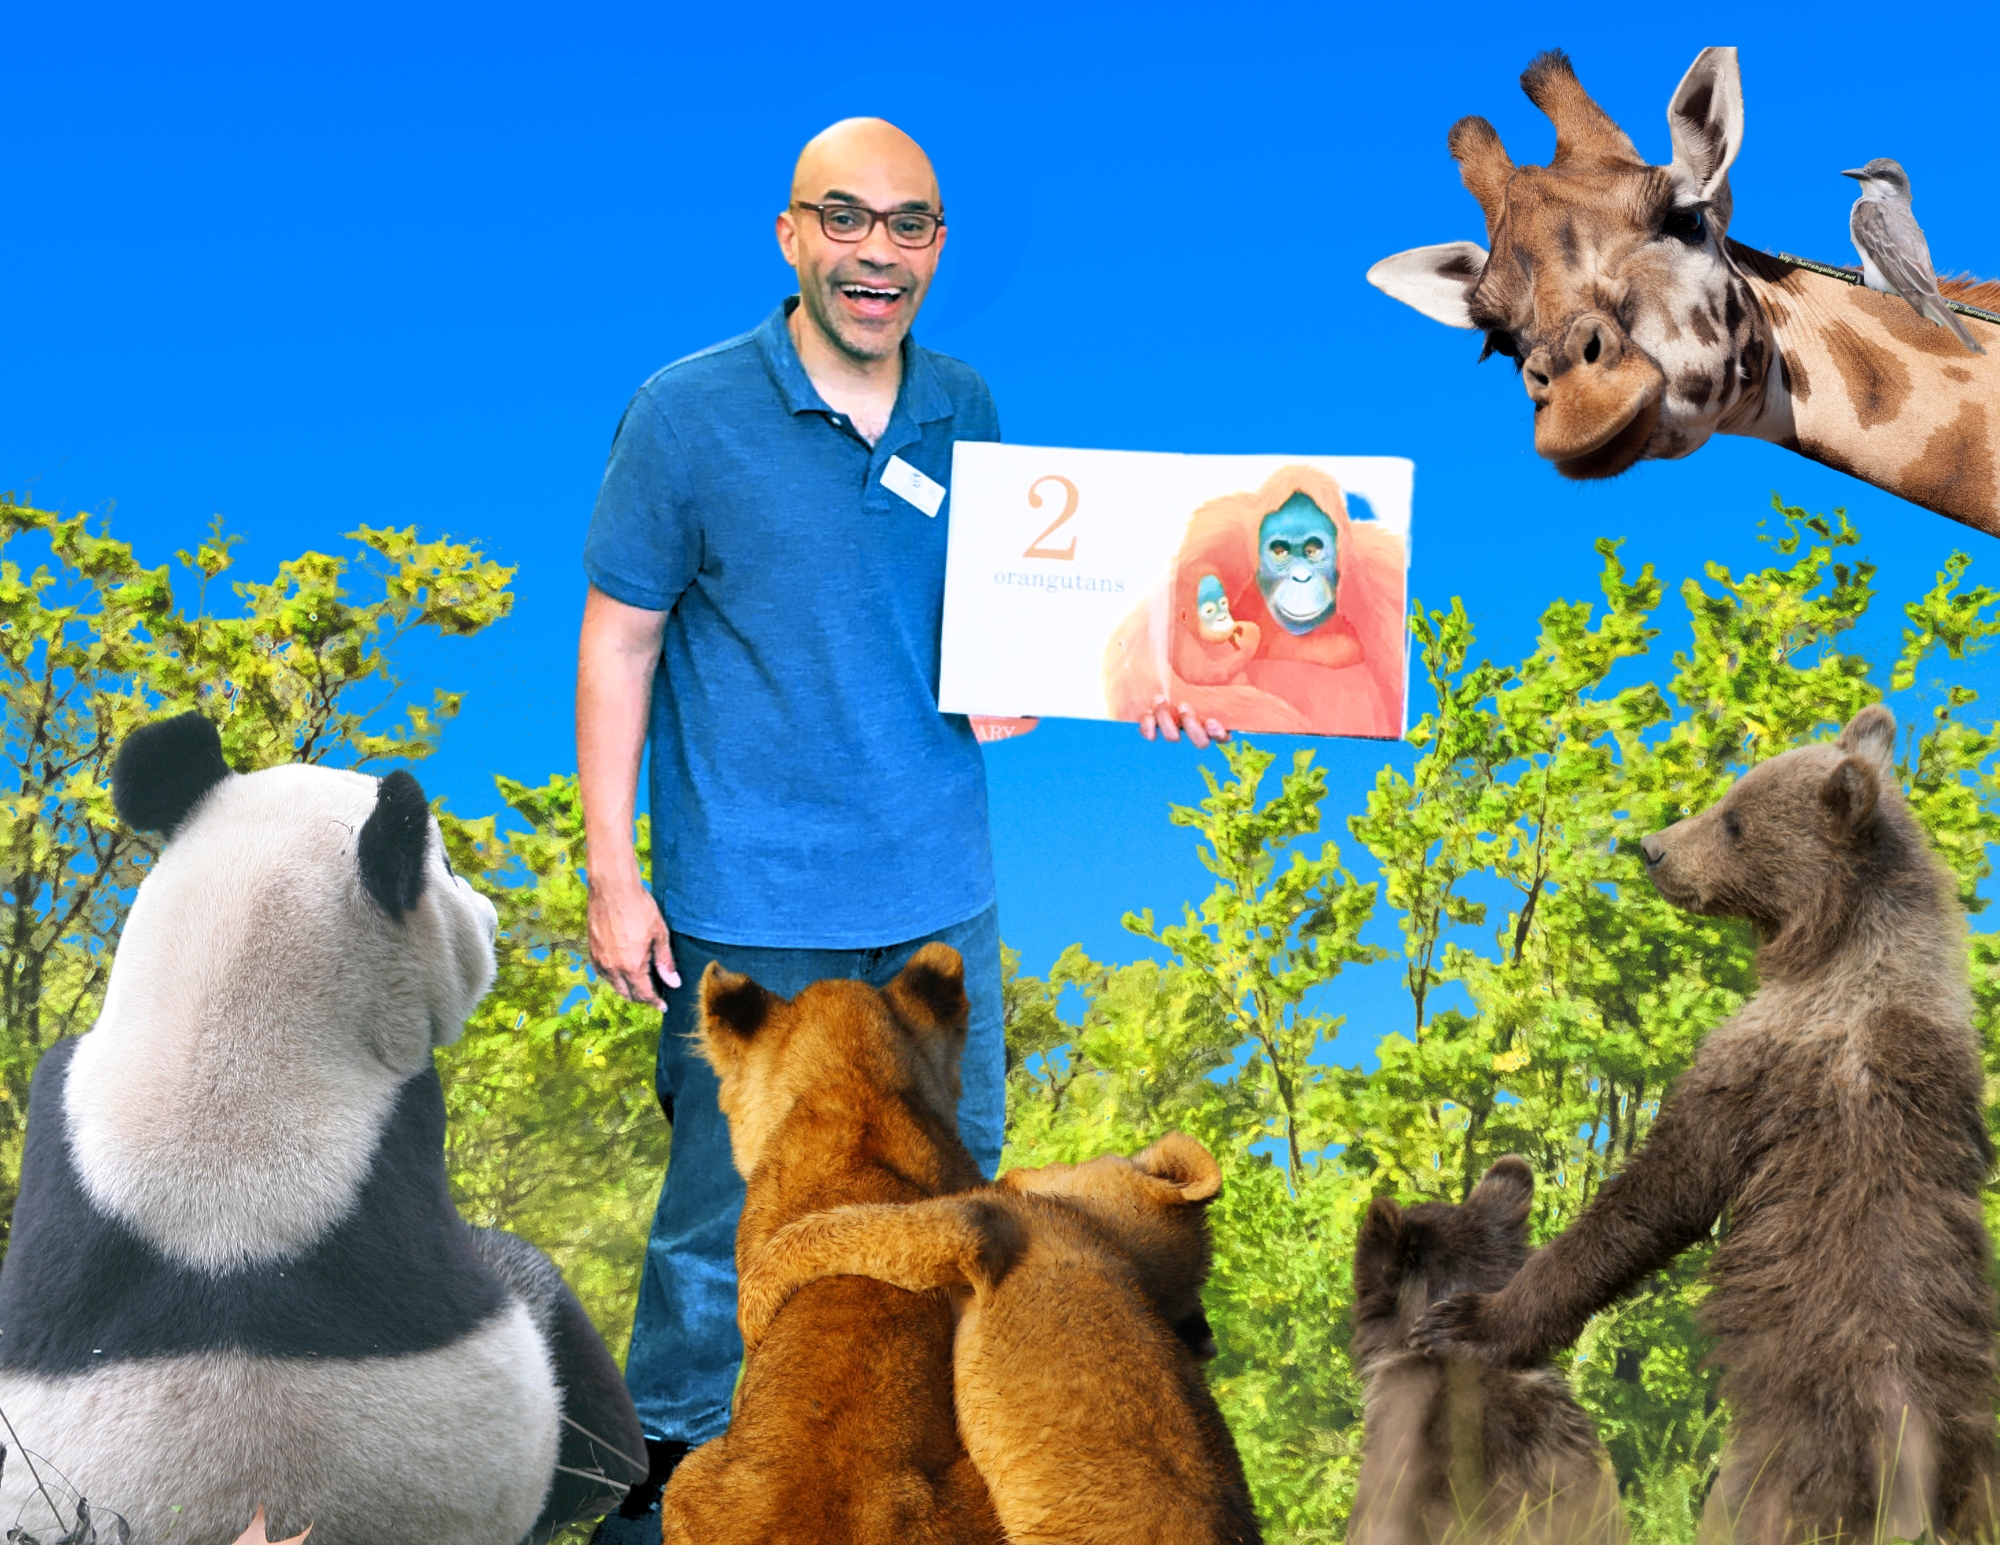 Mr Jose reading to animals